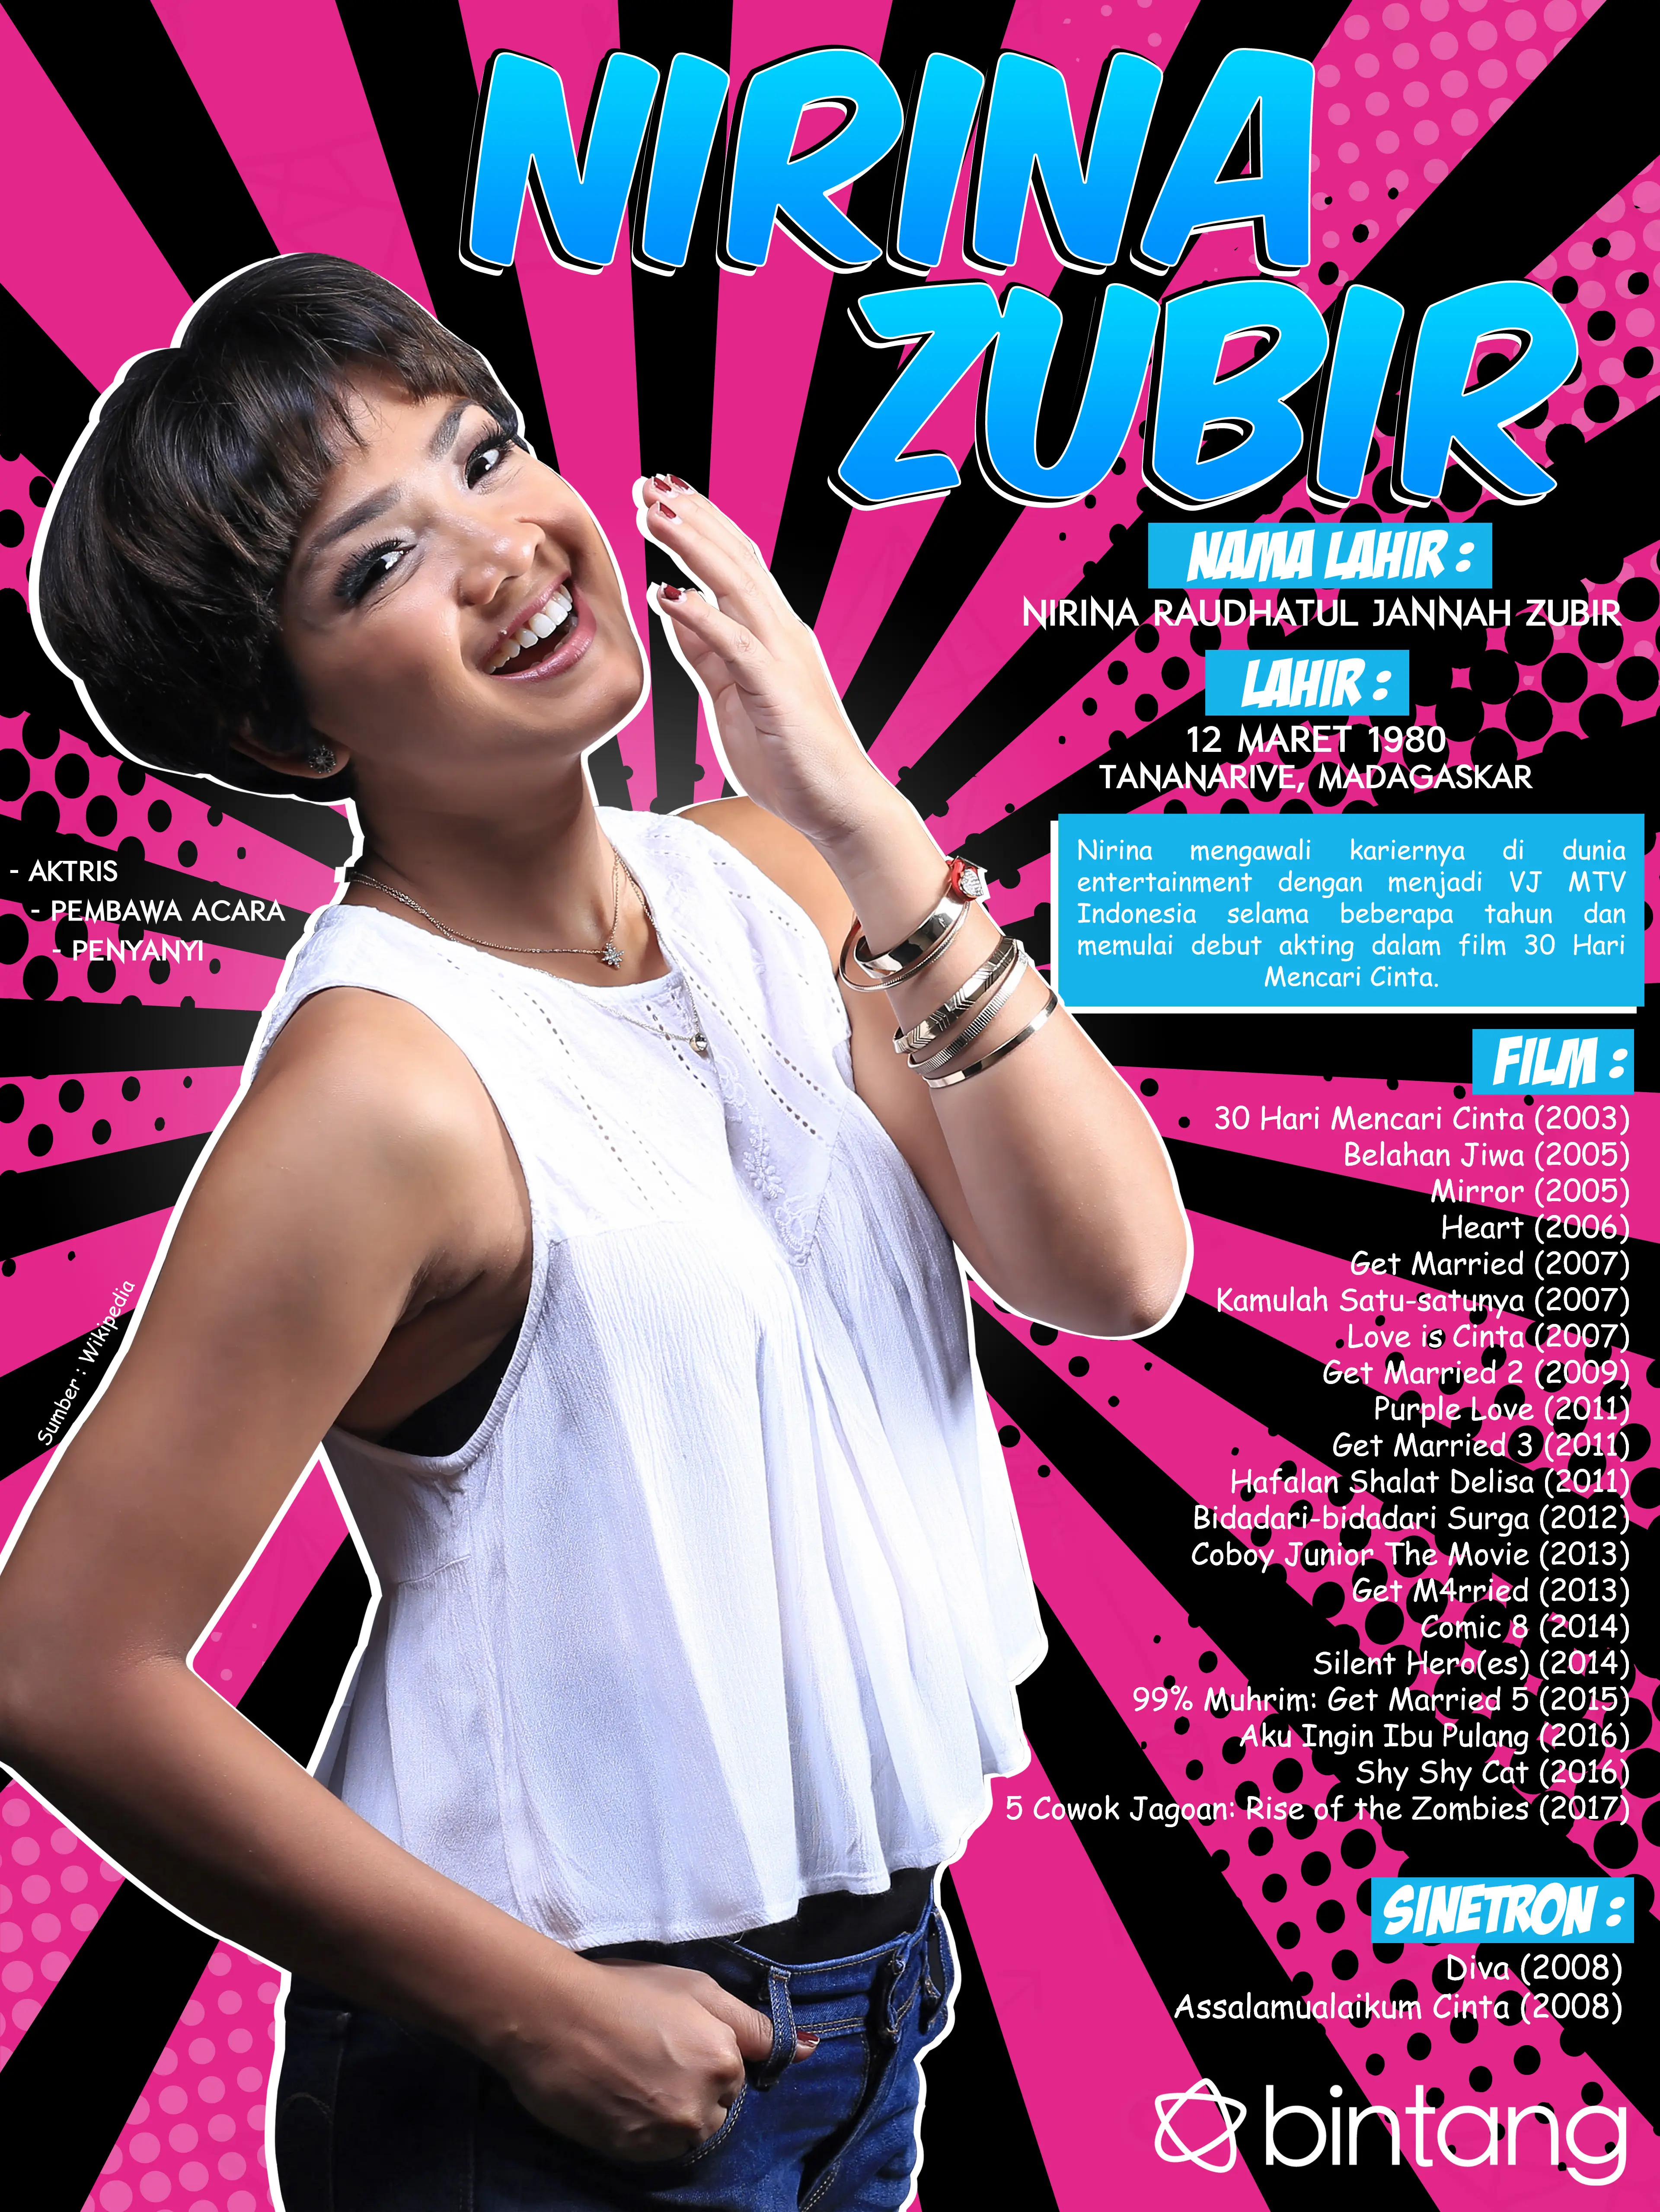 Celeb Bio Nirina Zubir (Fotografer: Deki Prayoga, Desain: Nurman Abdul Hakim/Bintang.com)